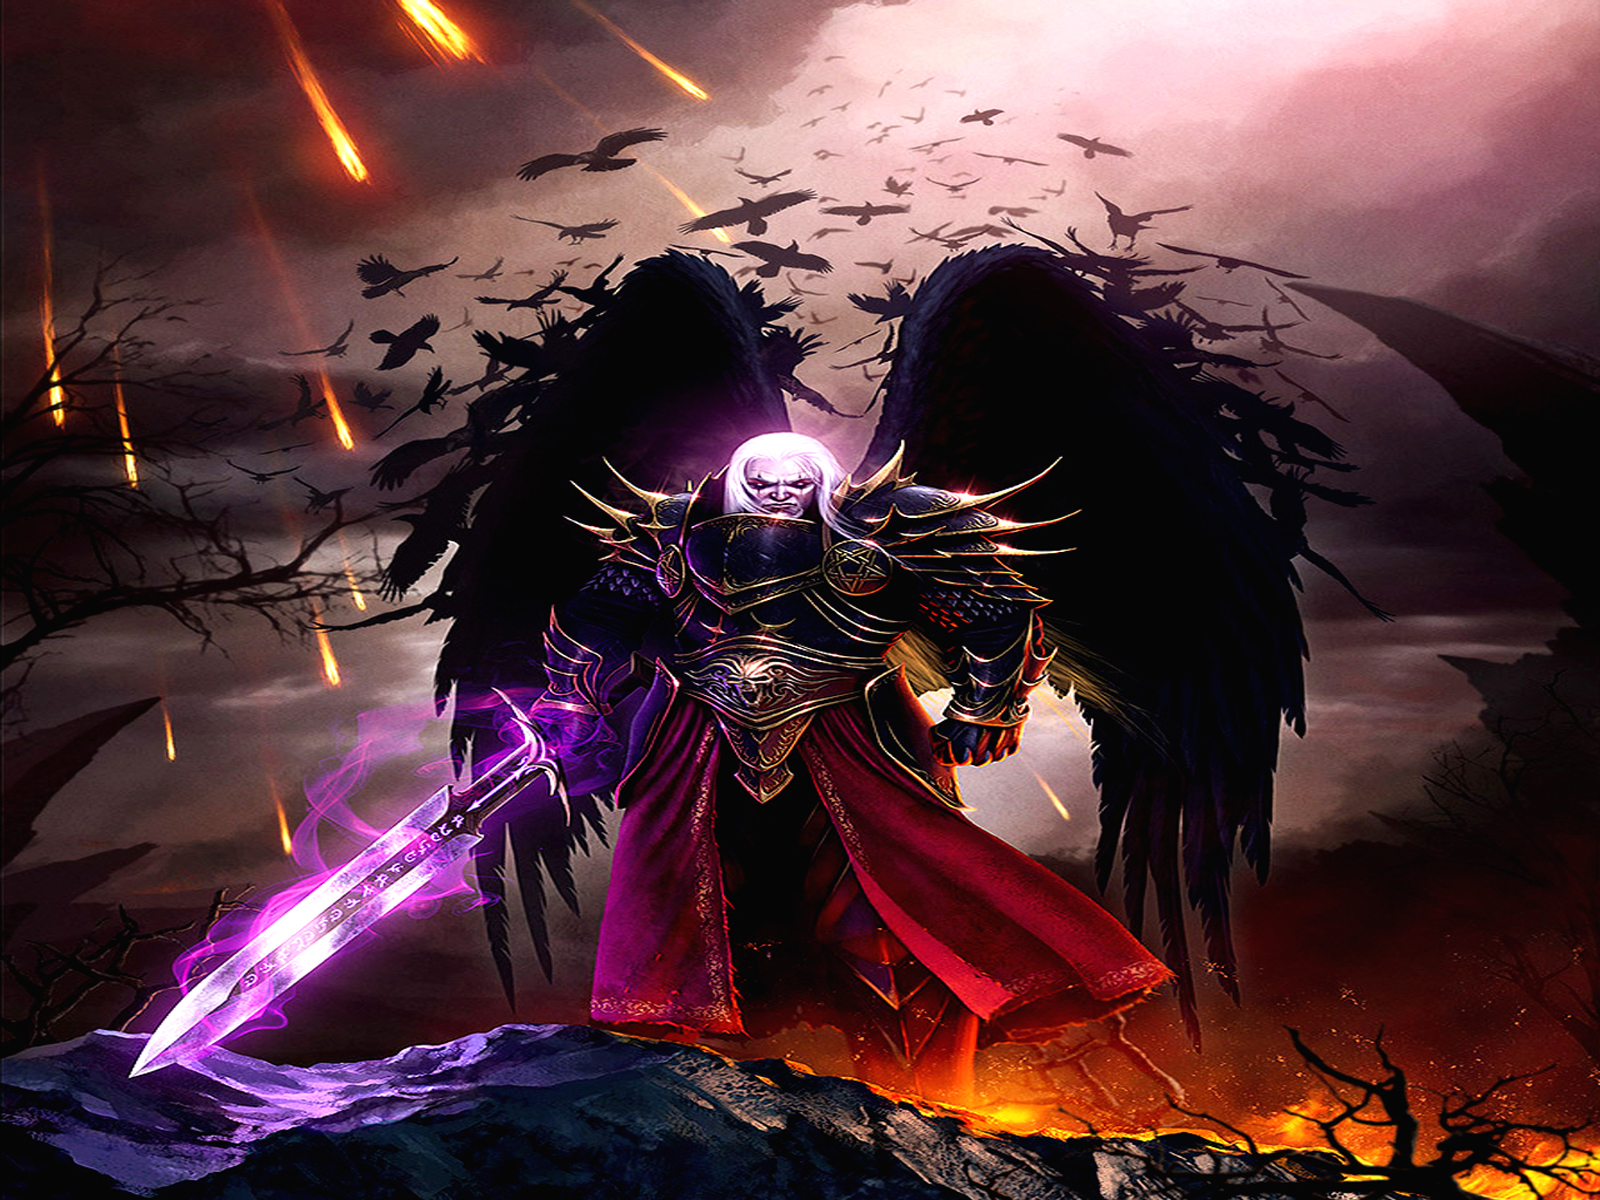 Archangel Michael descending & fighting with demons illustration.